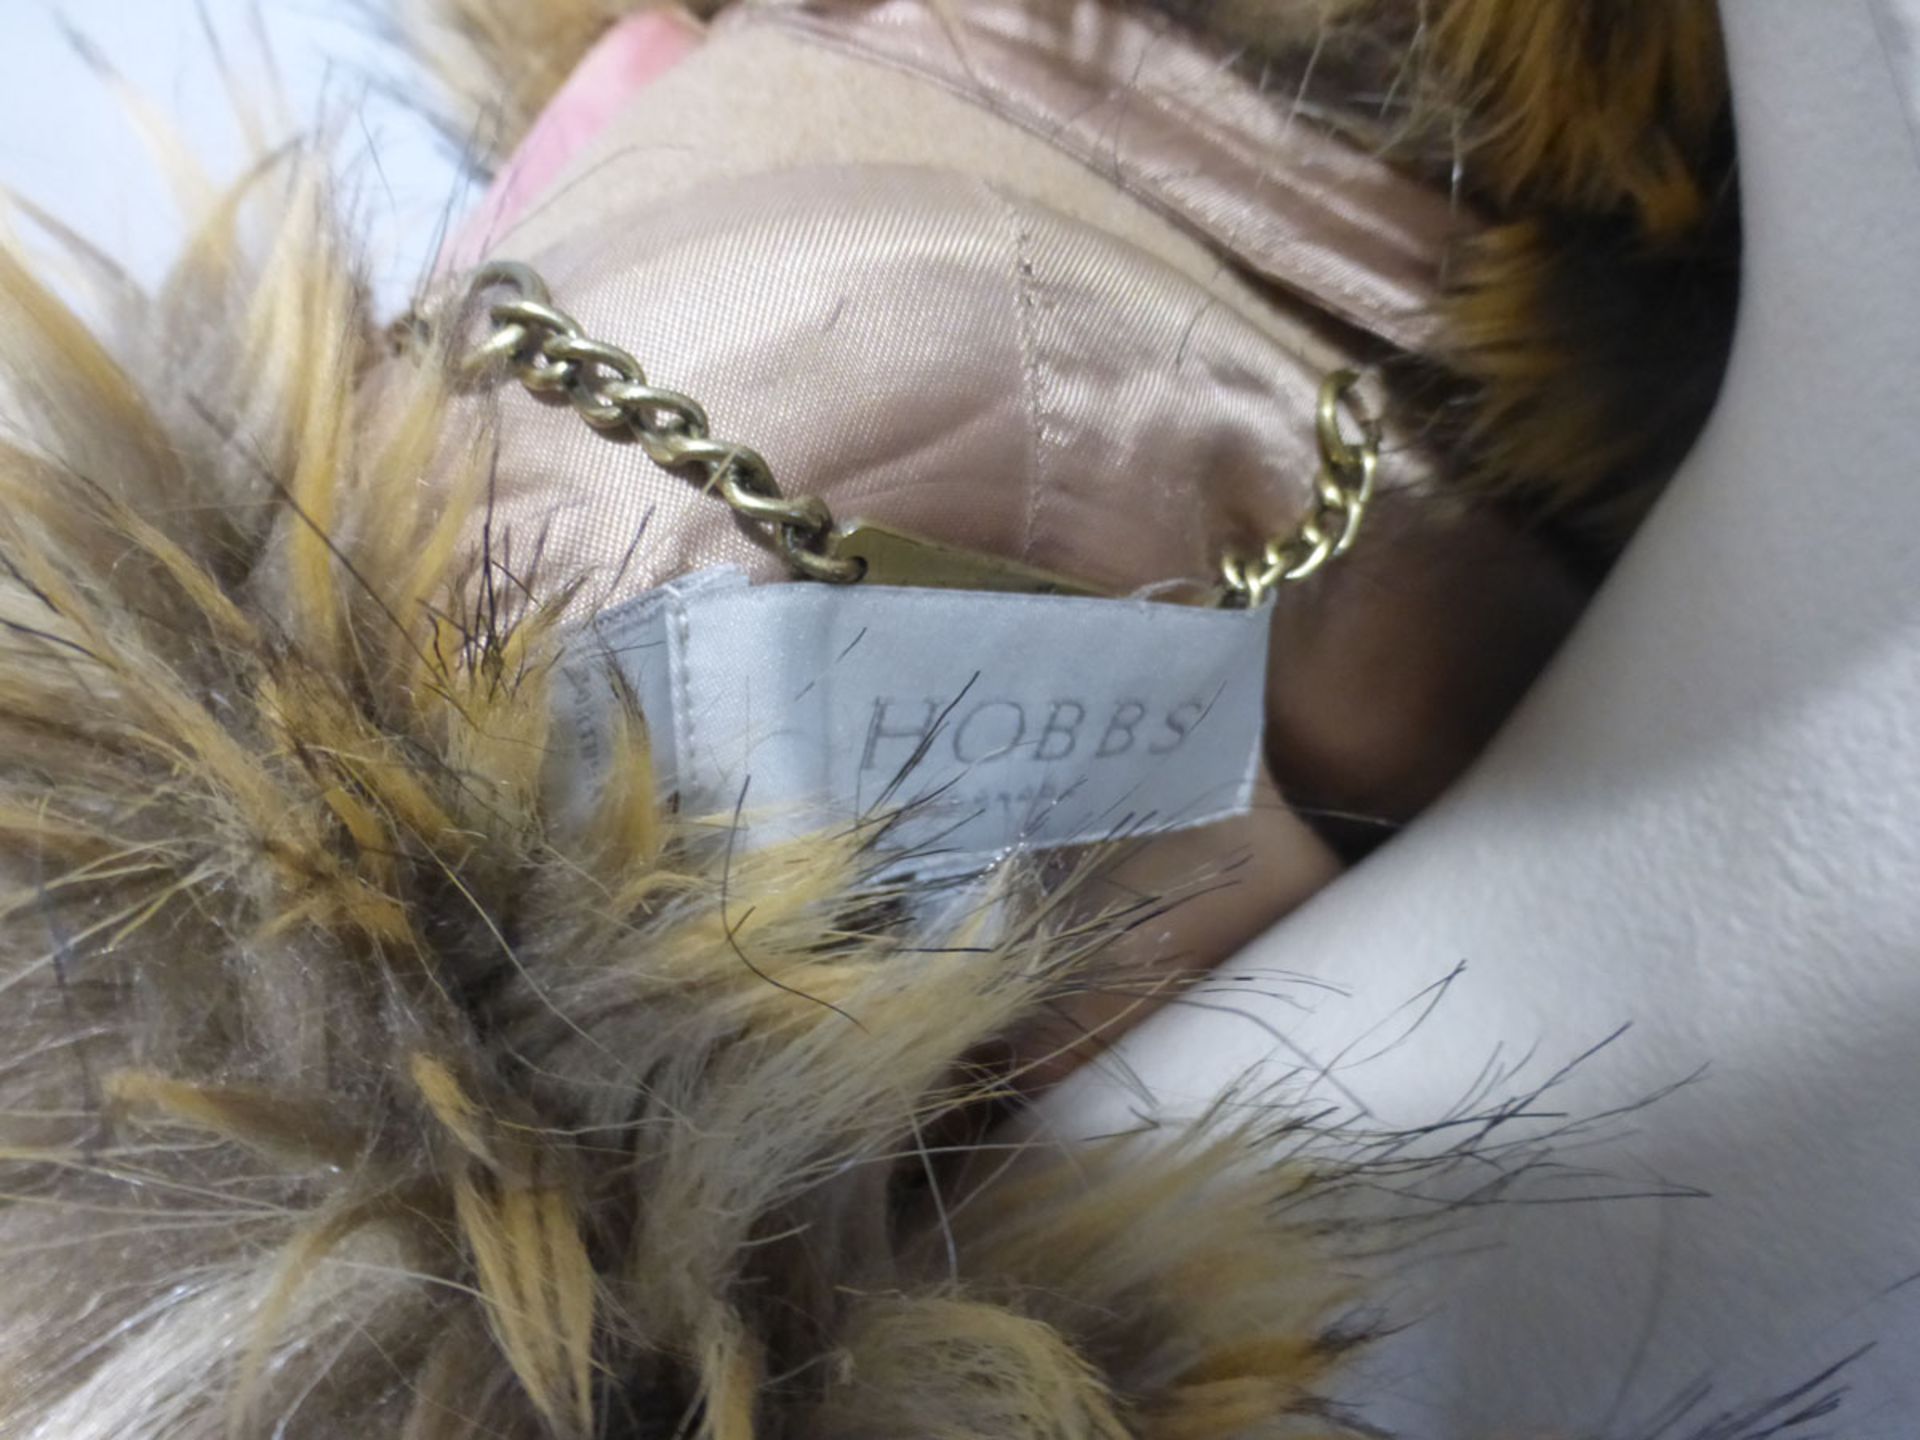 Hobbs ladies faux fur trim coat size 16 - Image 2 of 2